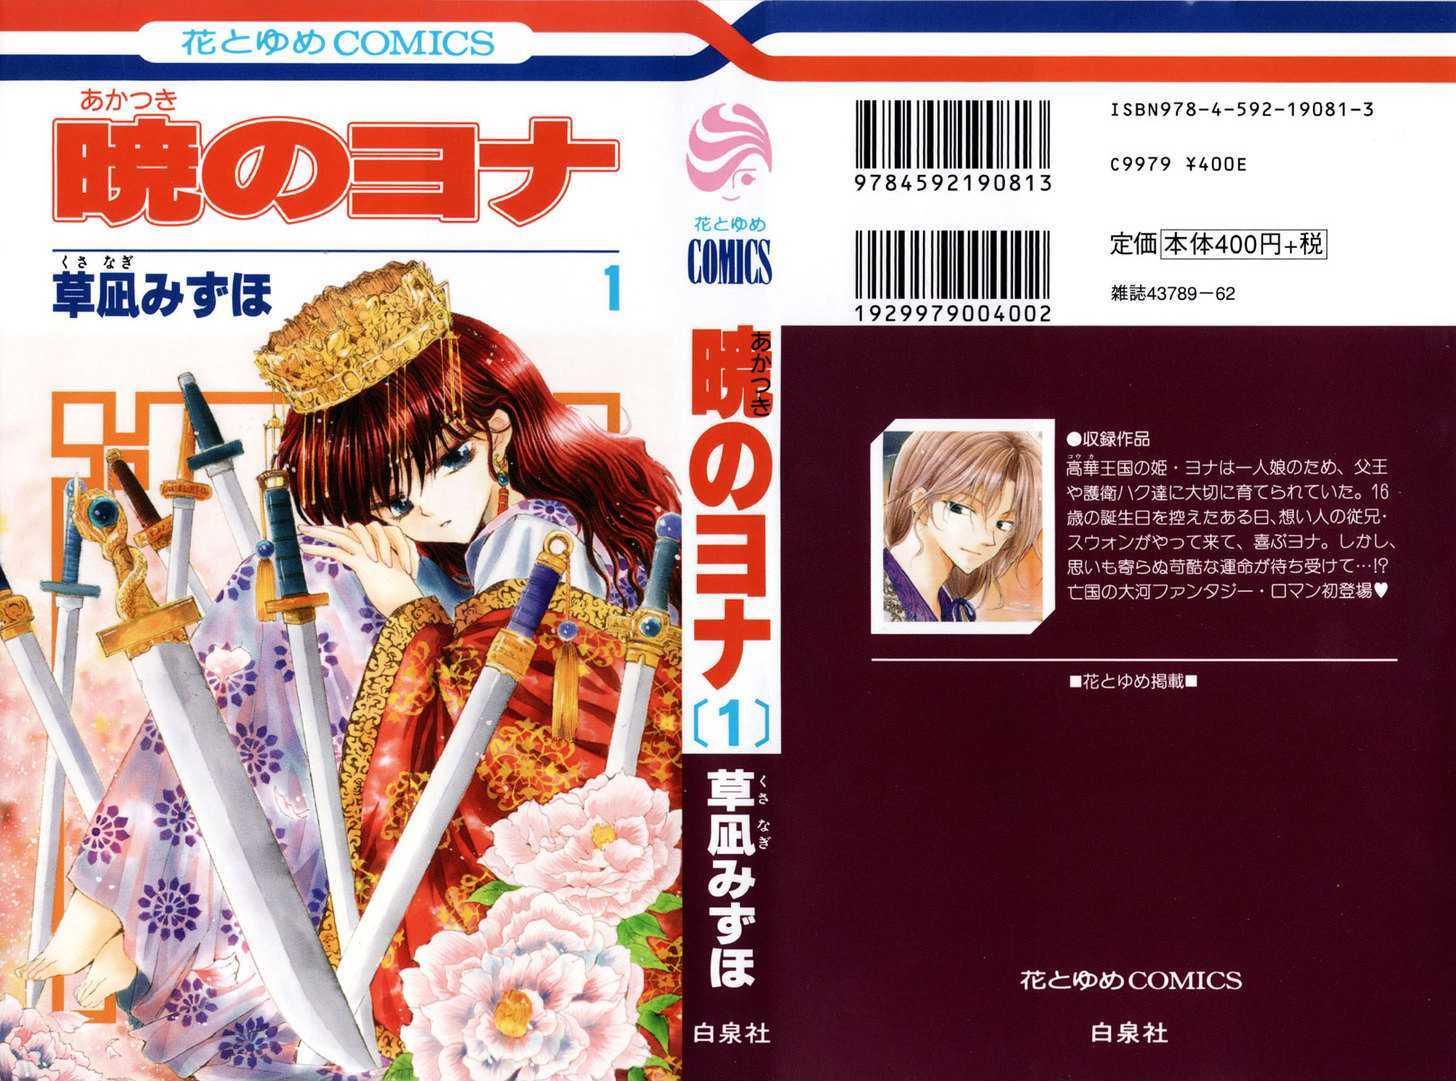 Read Yosuga No Sora Anthology Vol.1 Chapter 1: The Superficial Wise Woman!  on Mangakakalot